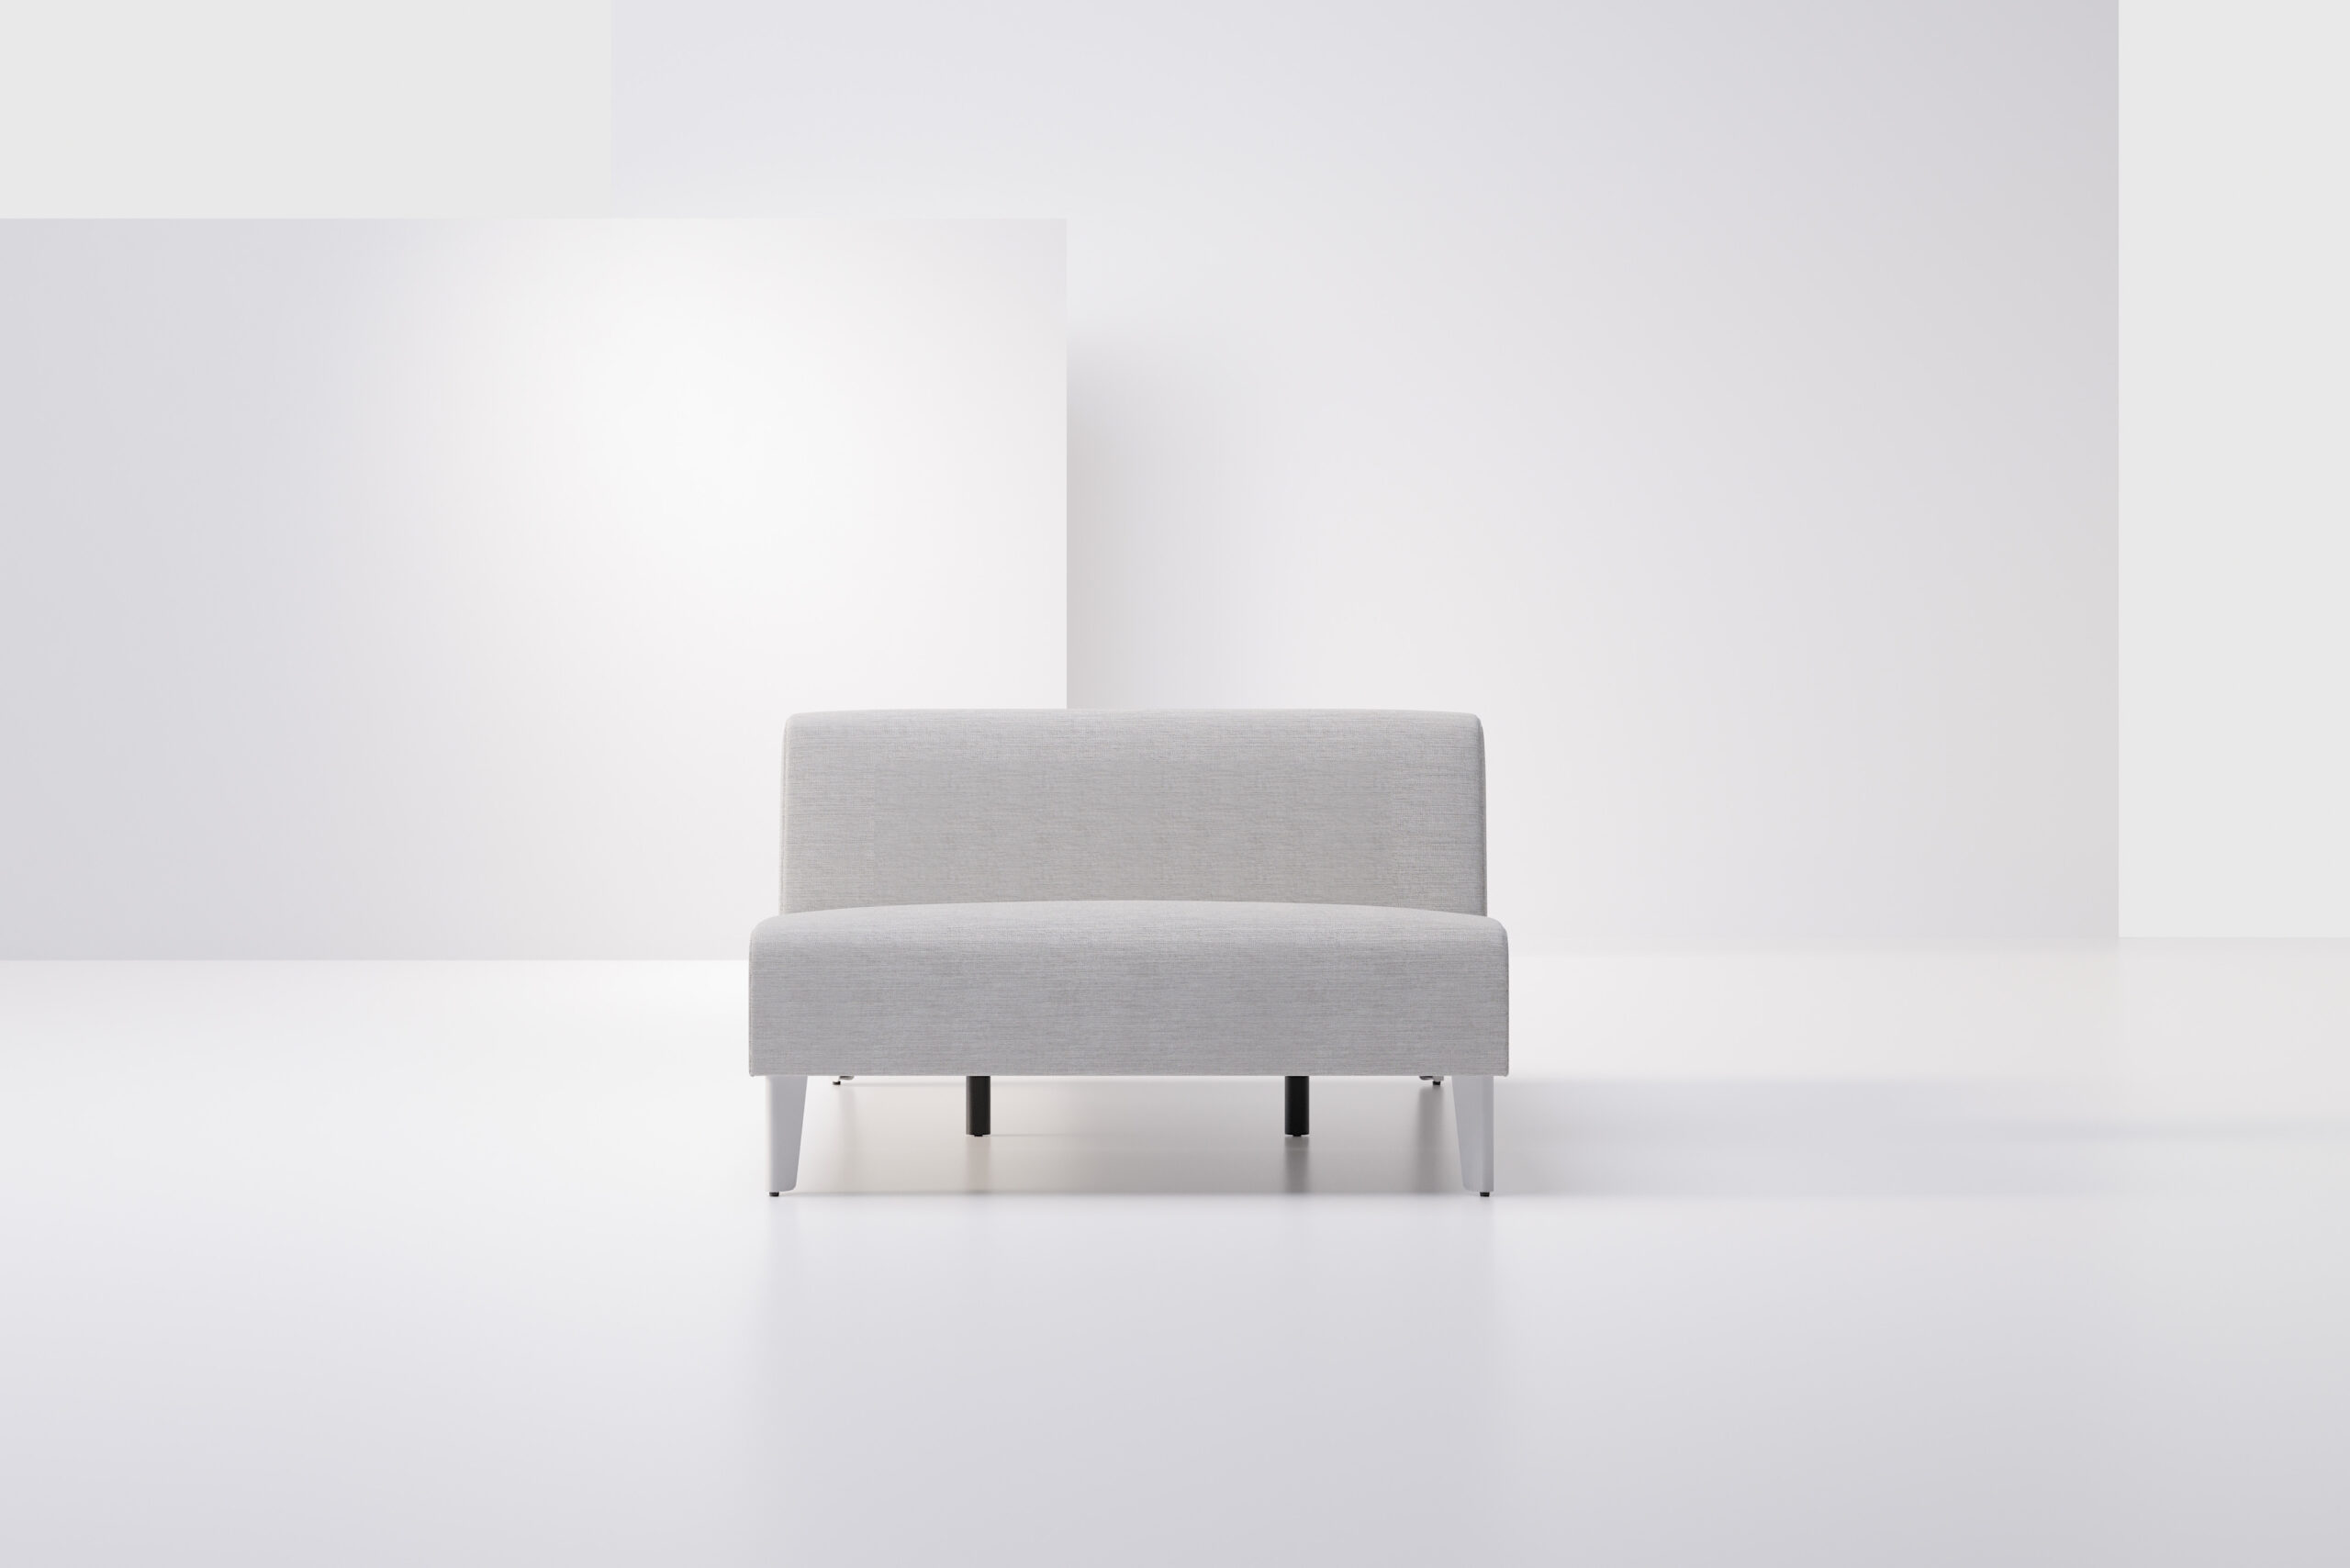 Avila Double Sided Sofa Featured Product Image